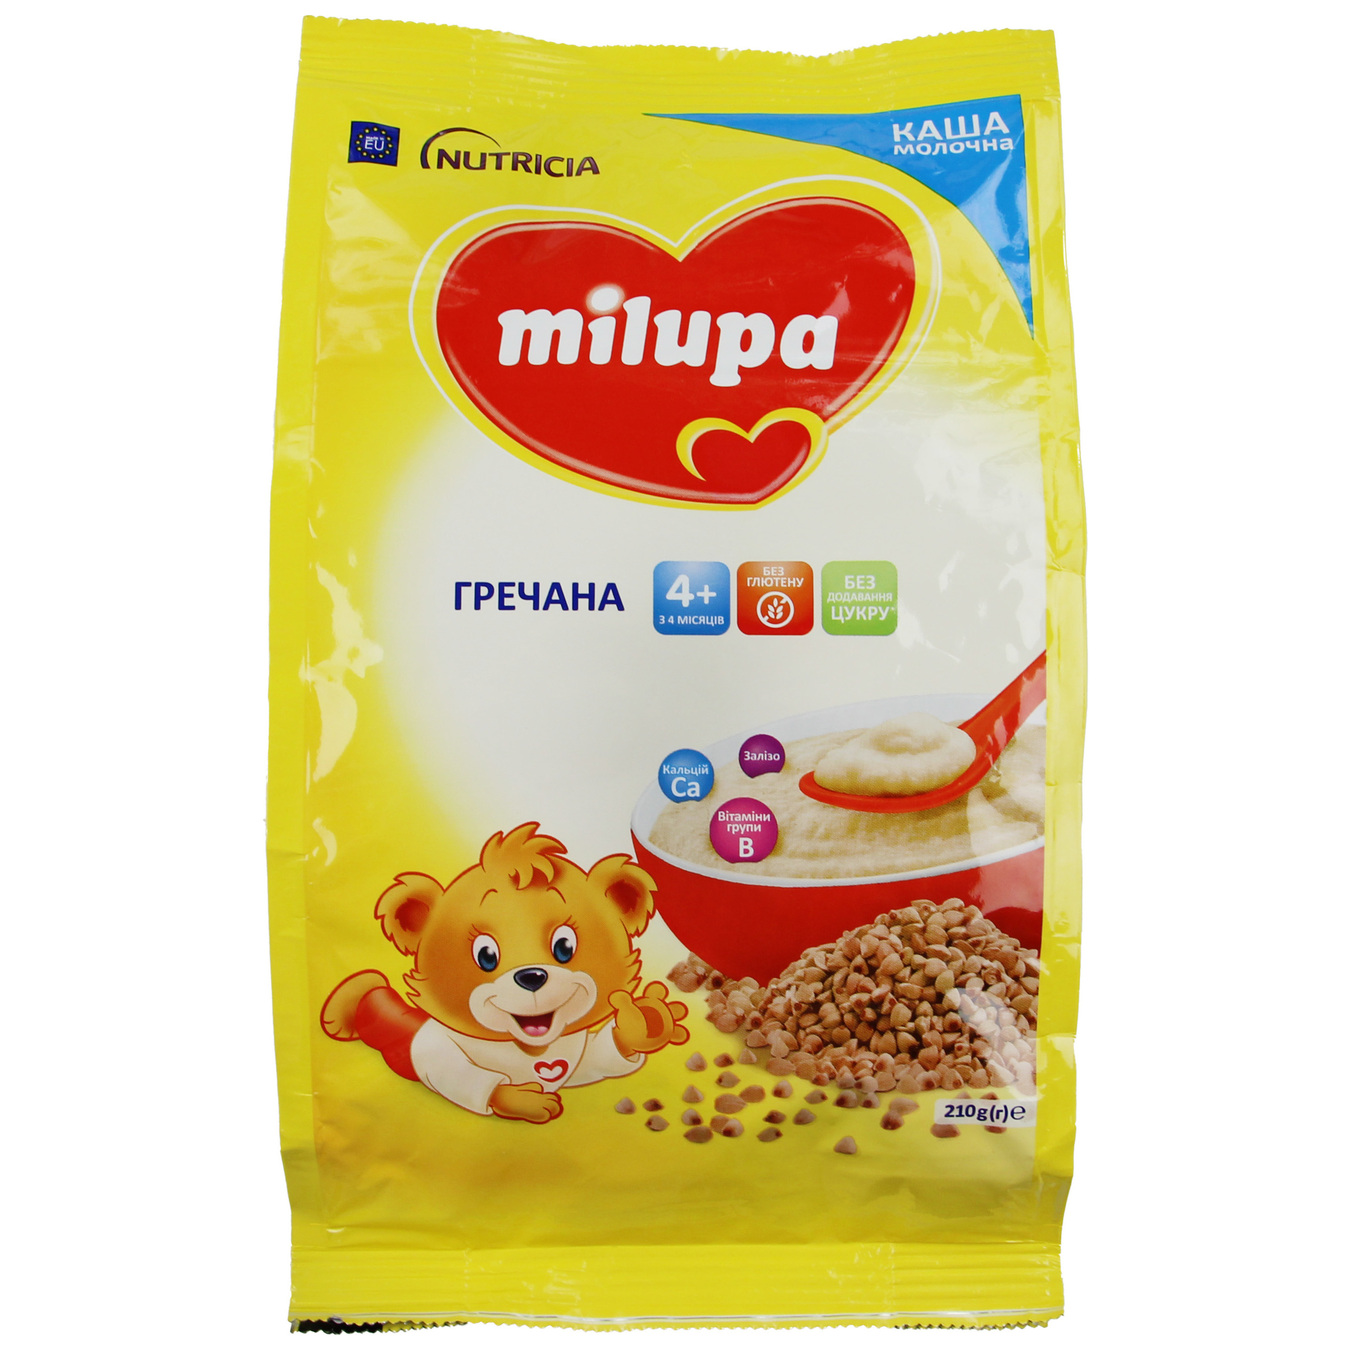 Milupa for children from 4 months milk buckwheat porridge 210g 3